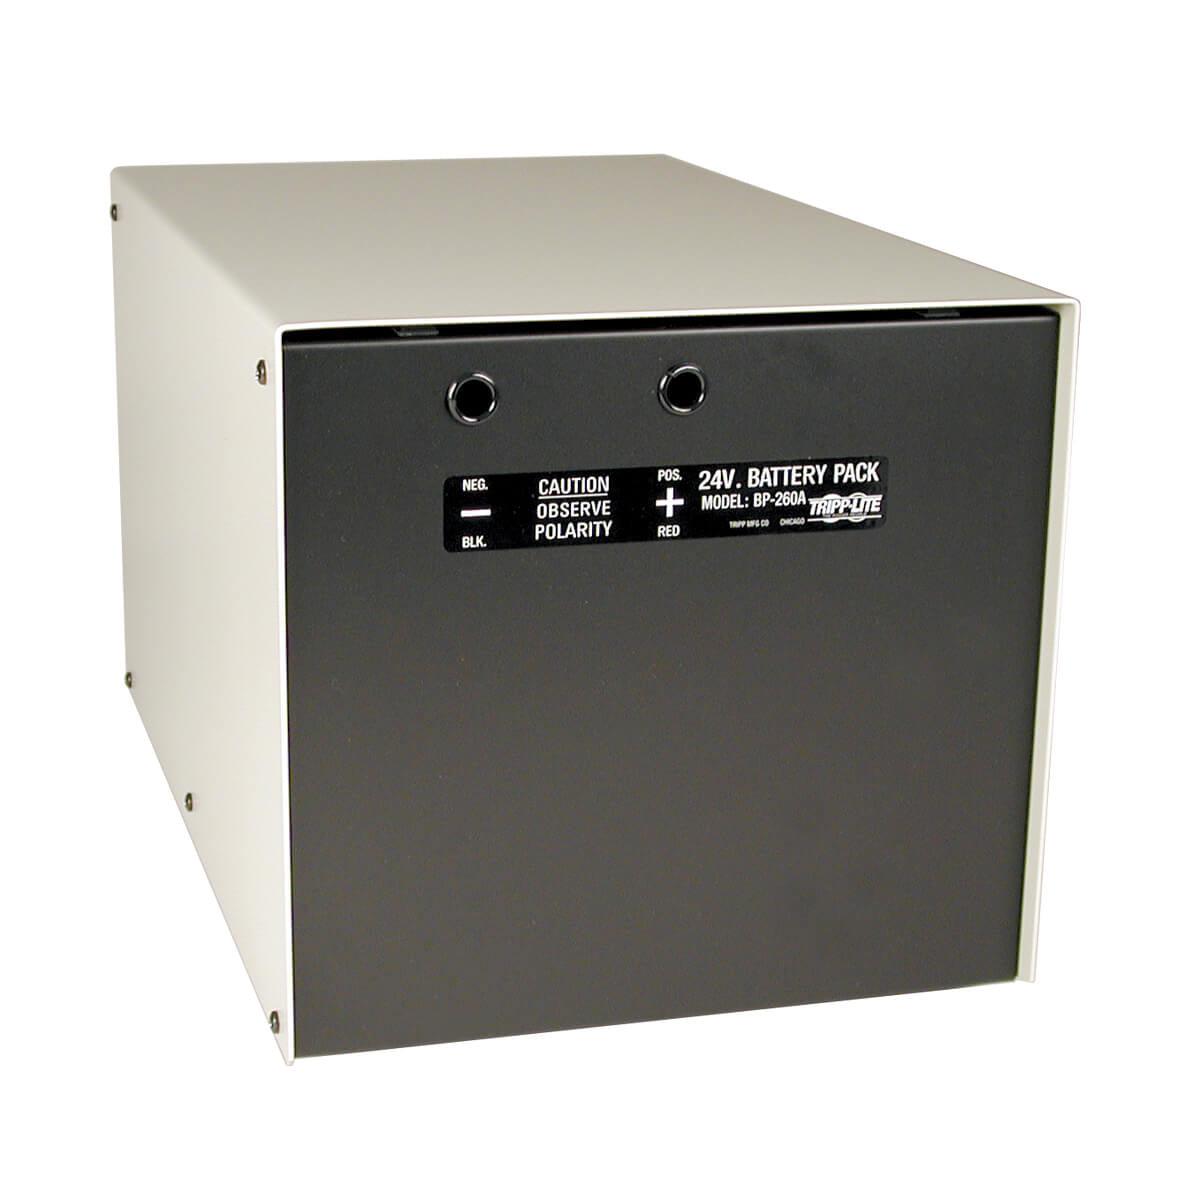 Tripp Lite 12V / 24V External Battery Pack Enclosure For Powerverter Aps Inverter / Chargers, Tower